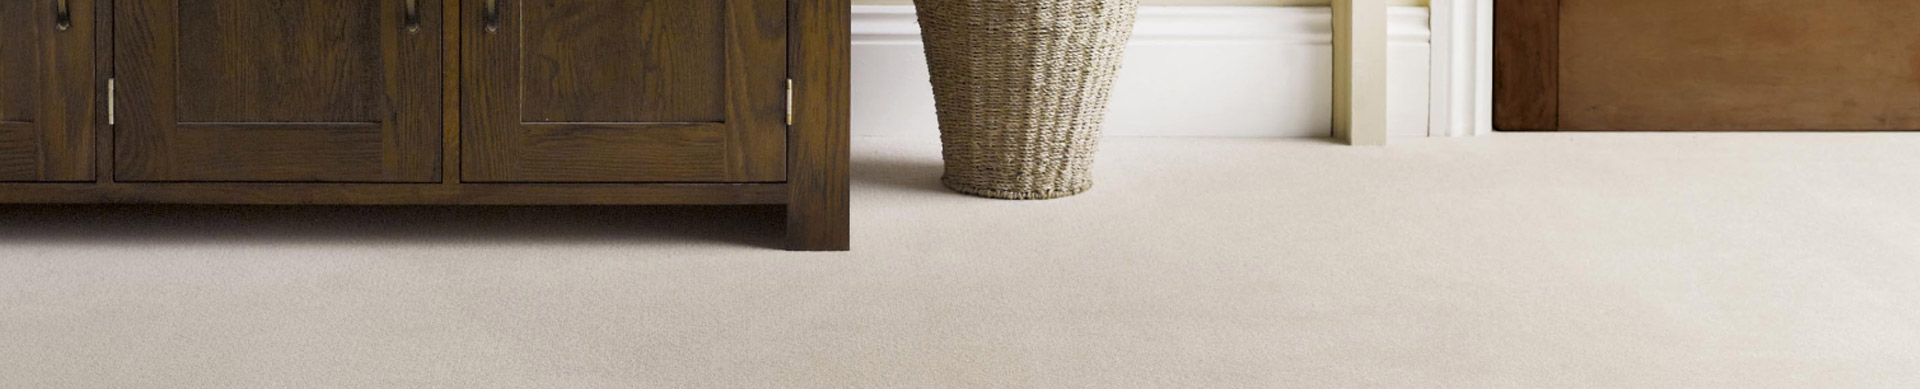 Guernsey Carpets Header